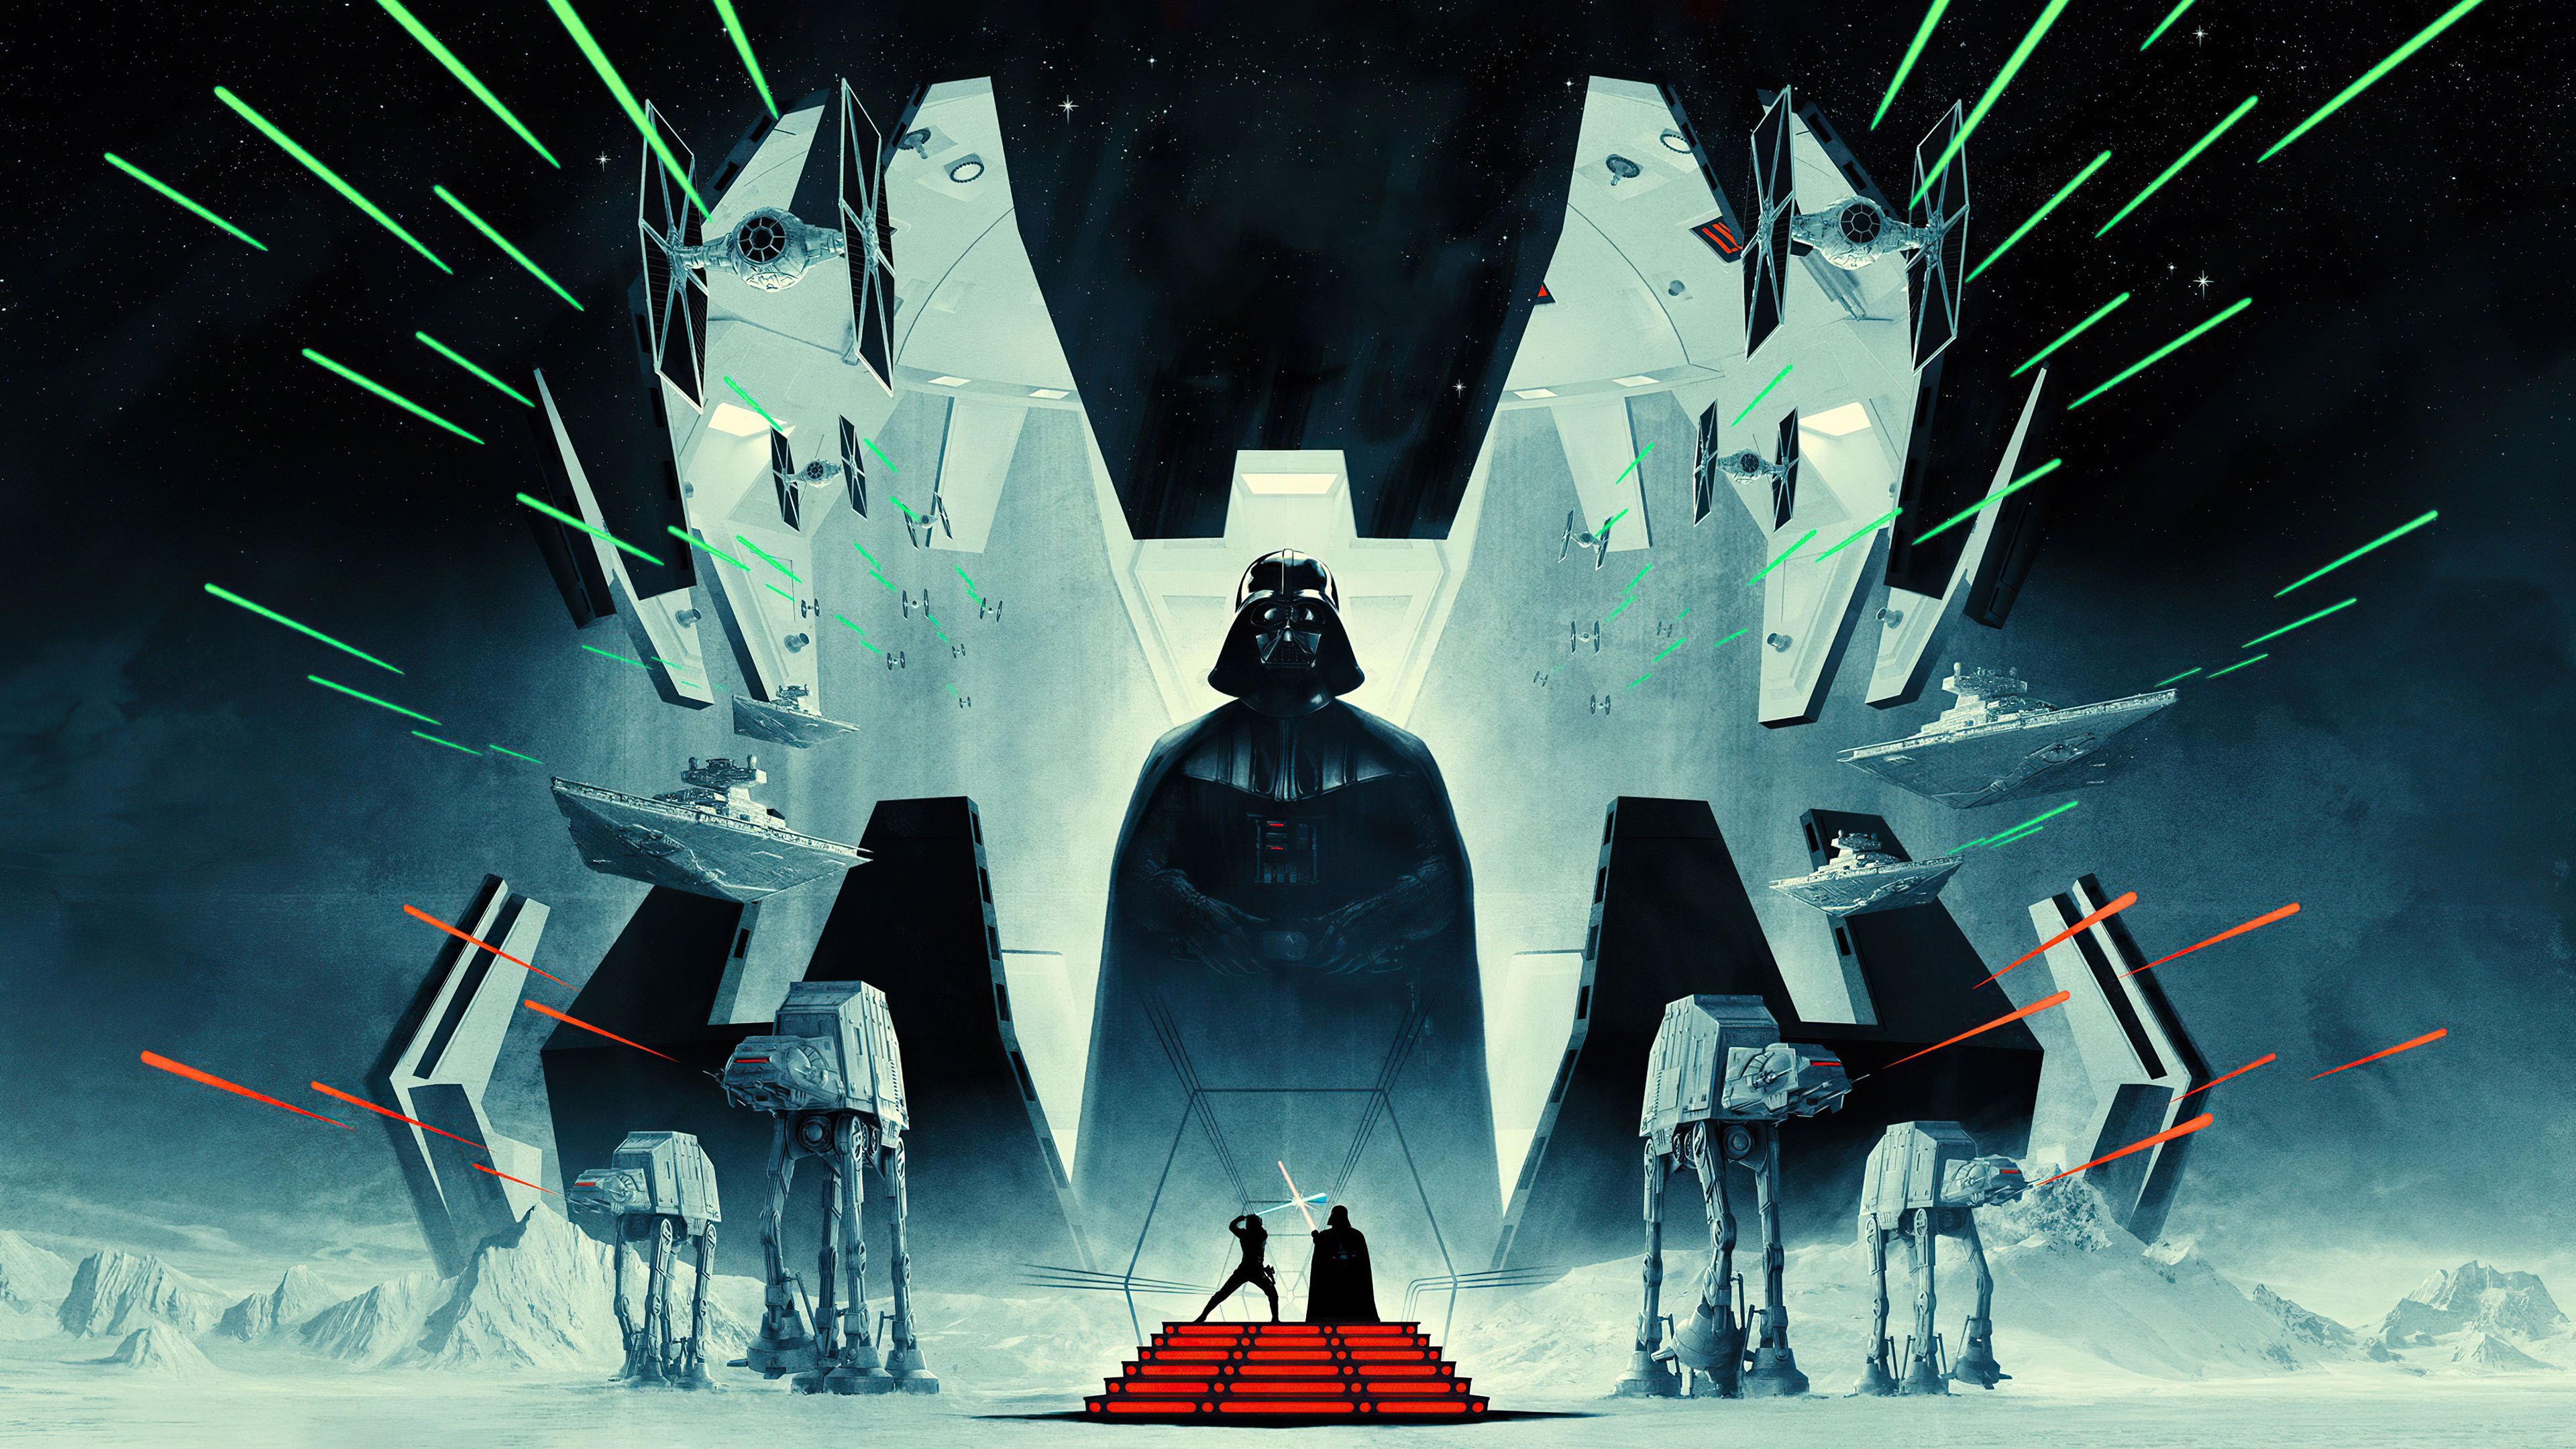 Star Wars Episode V: The Empire Strikes Back 4k Ultra HD Wallpaper